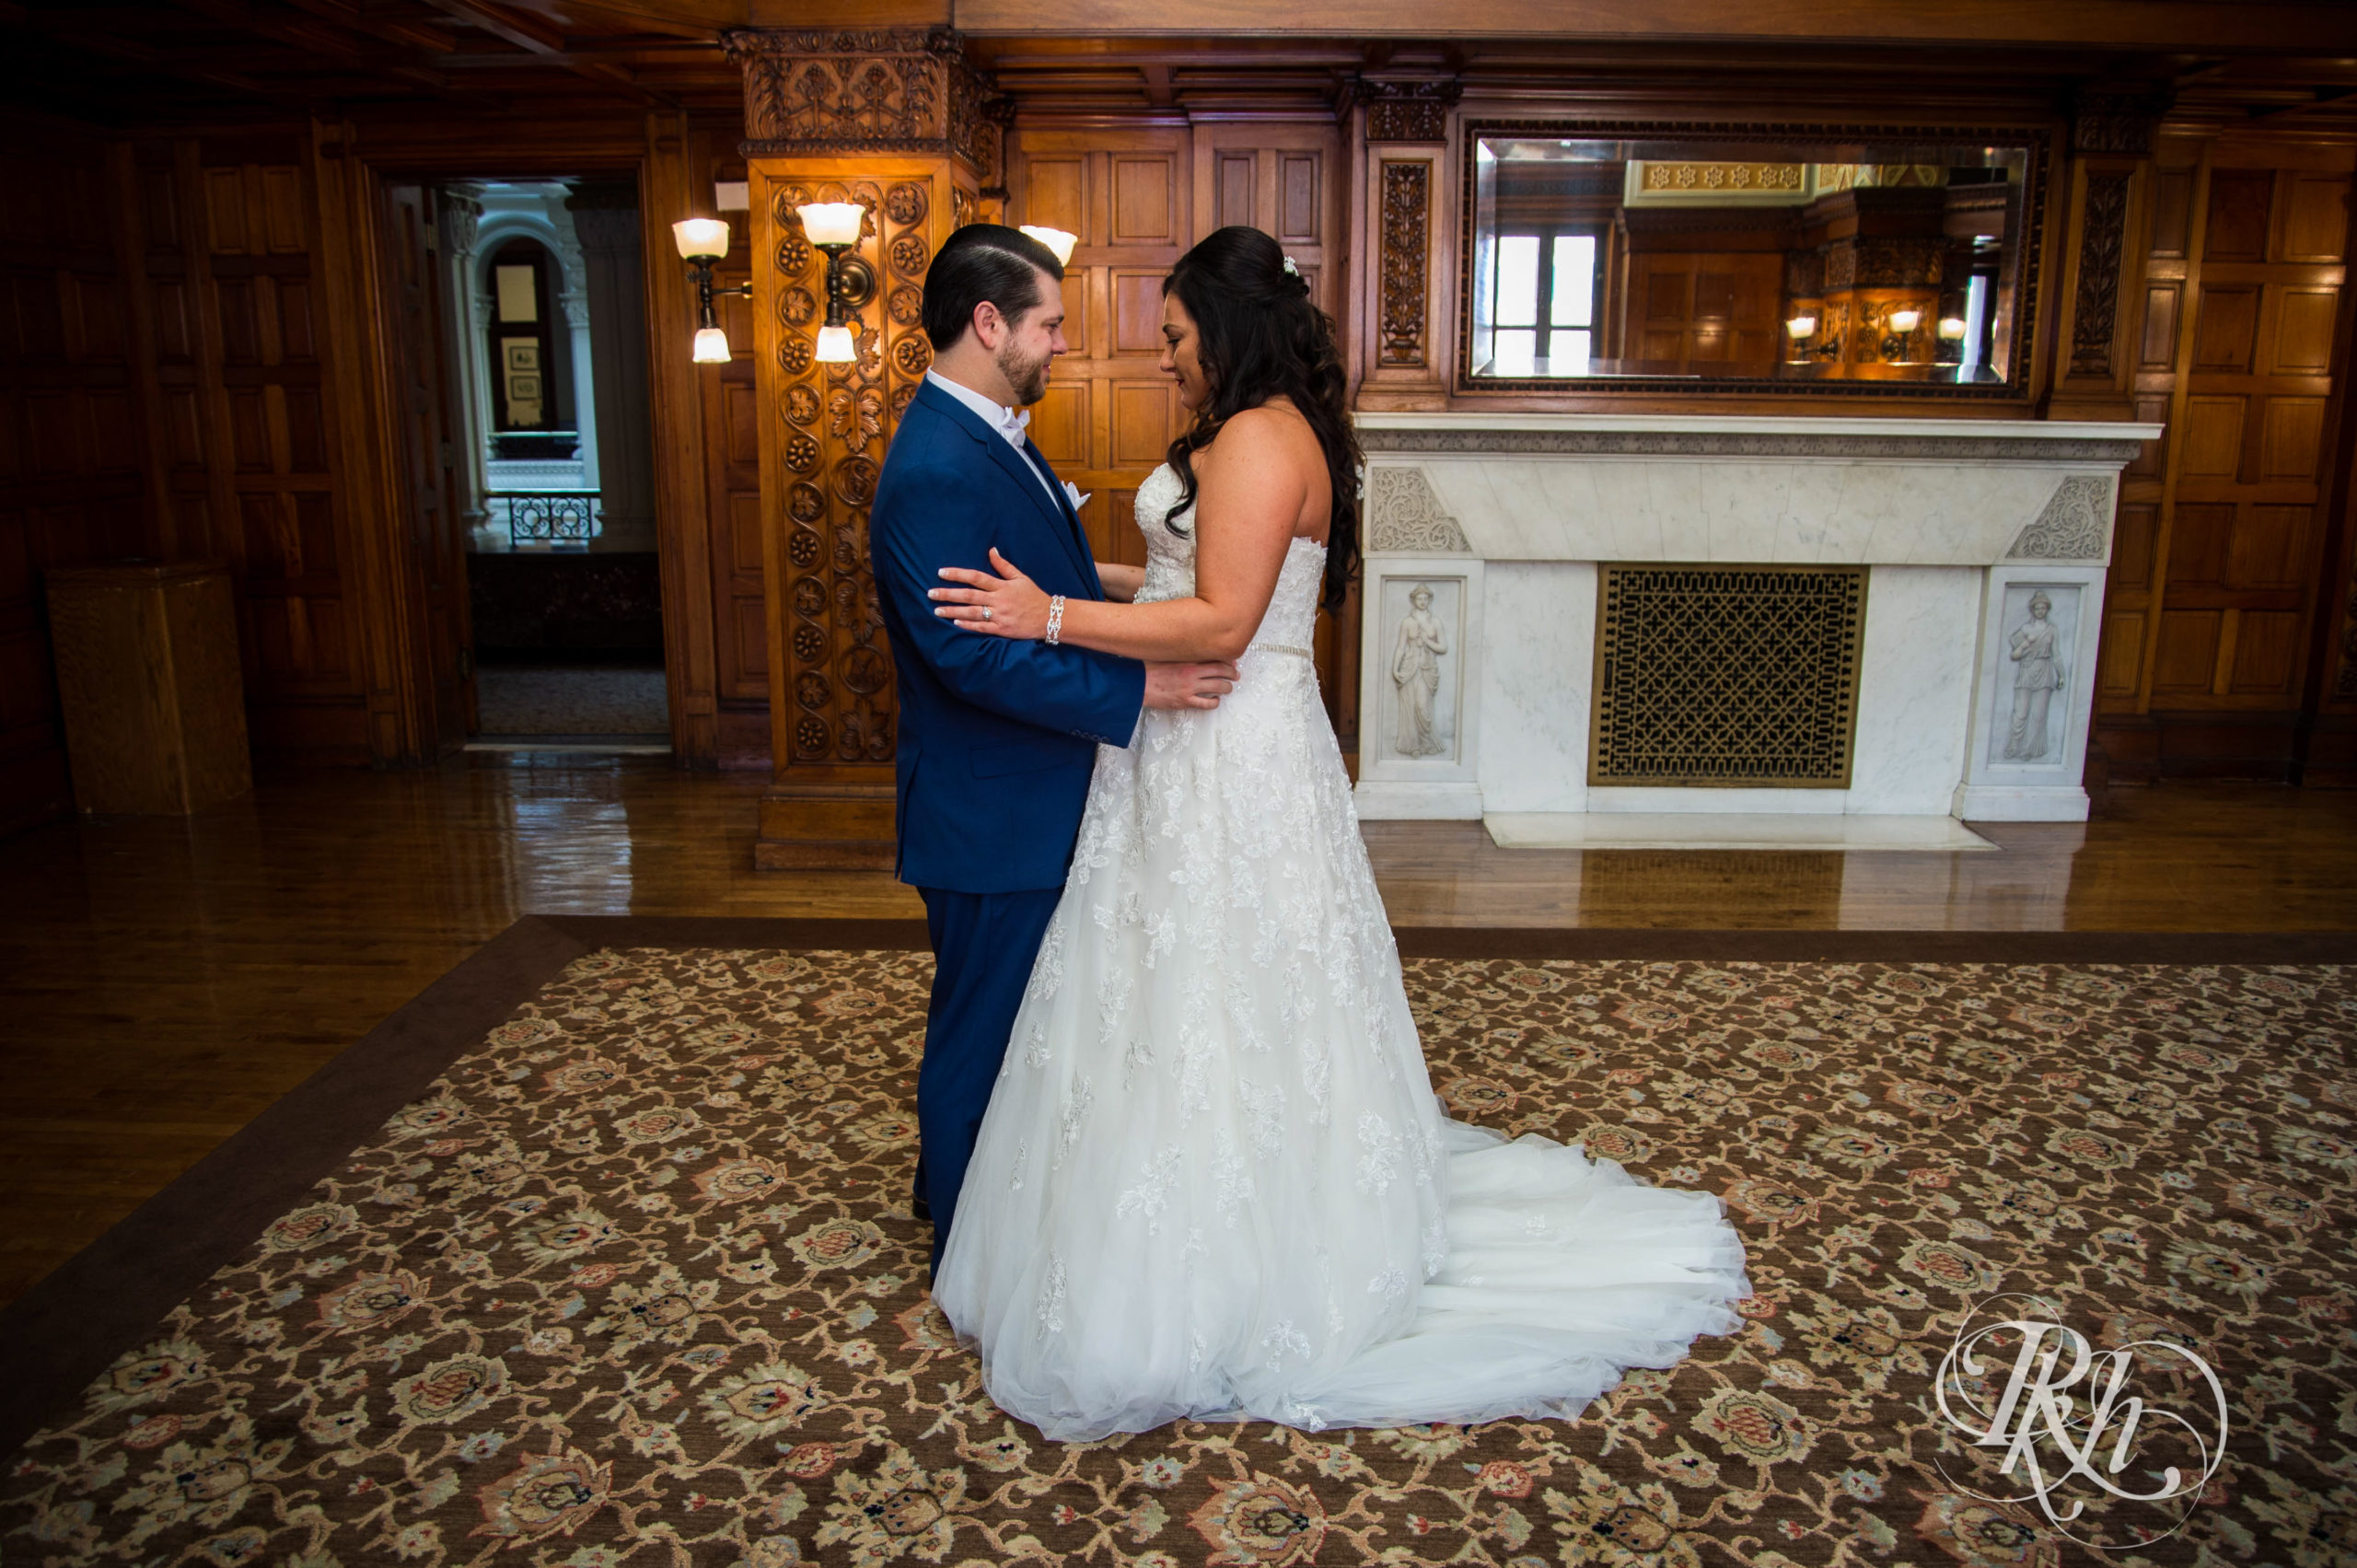 Bride and groom do first look before wedding at Landmark Center in Saint Paul, Minnesota.